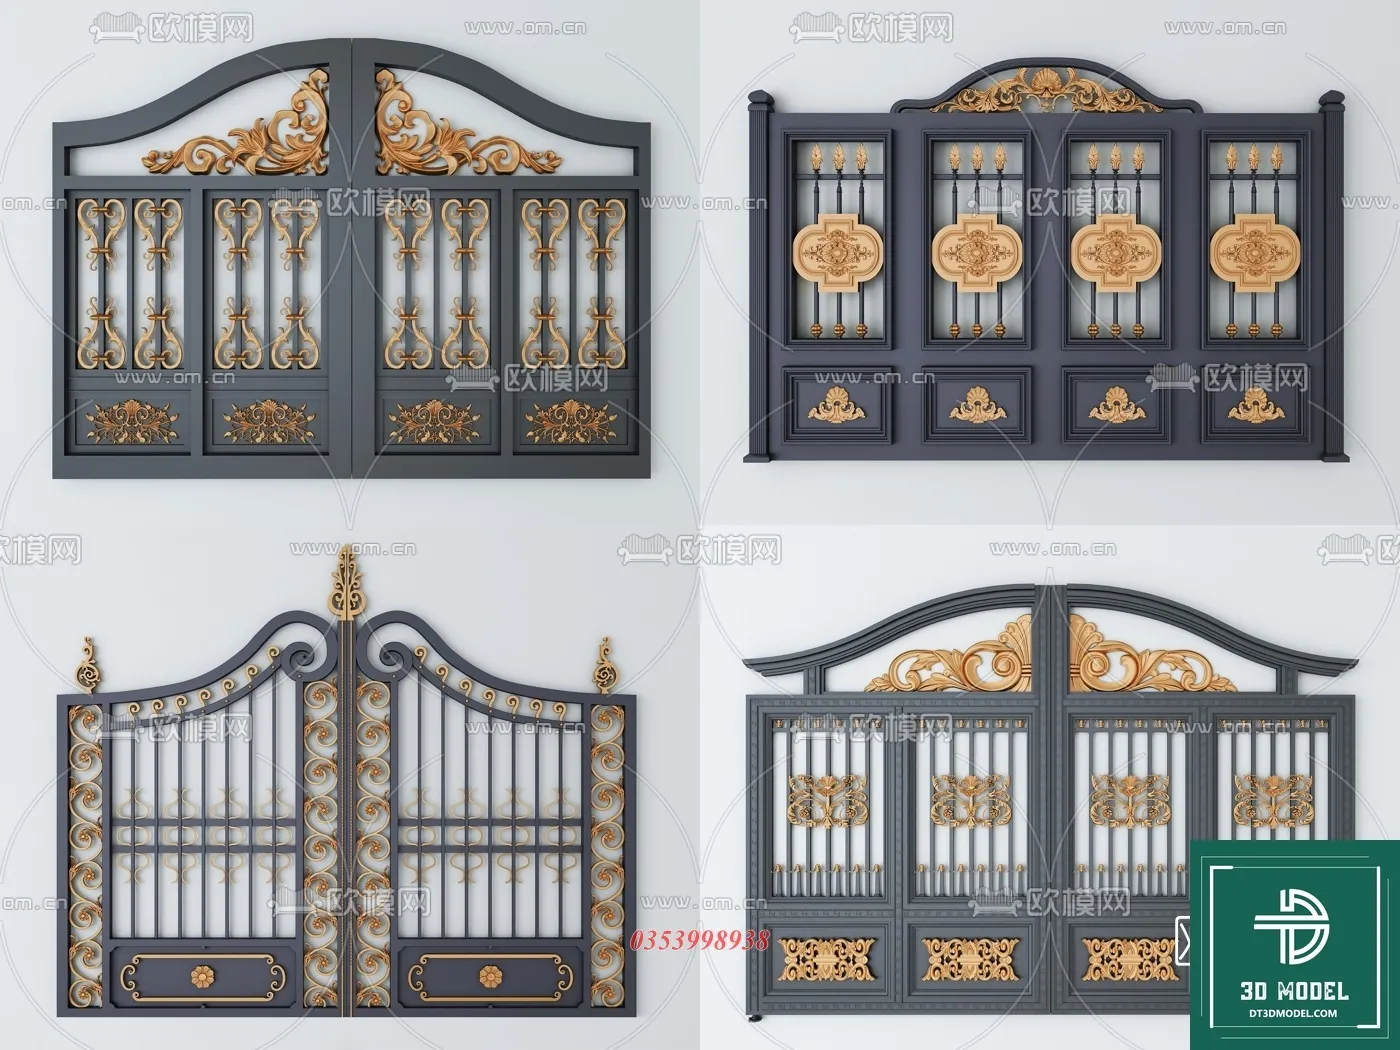 CLASSIC GATE – 3D MODELS – 030